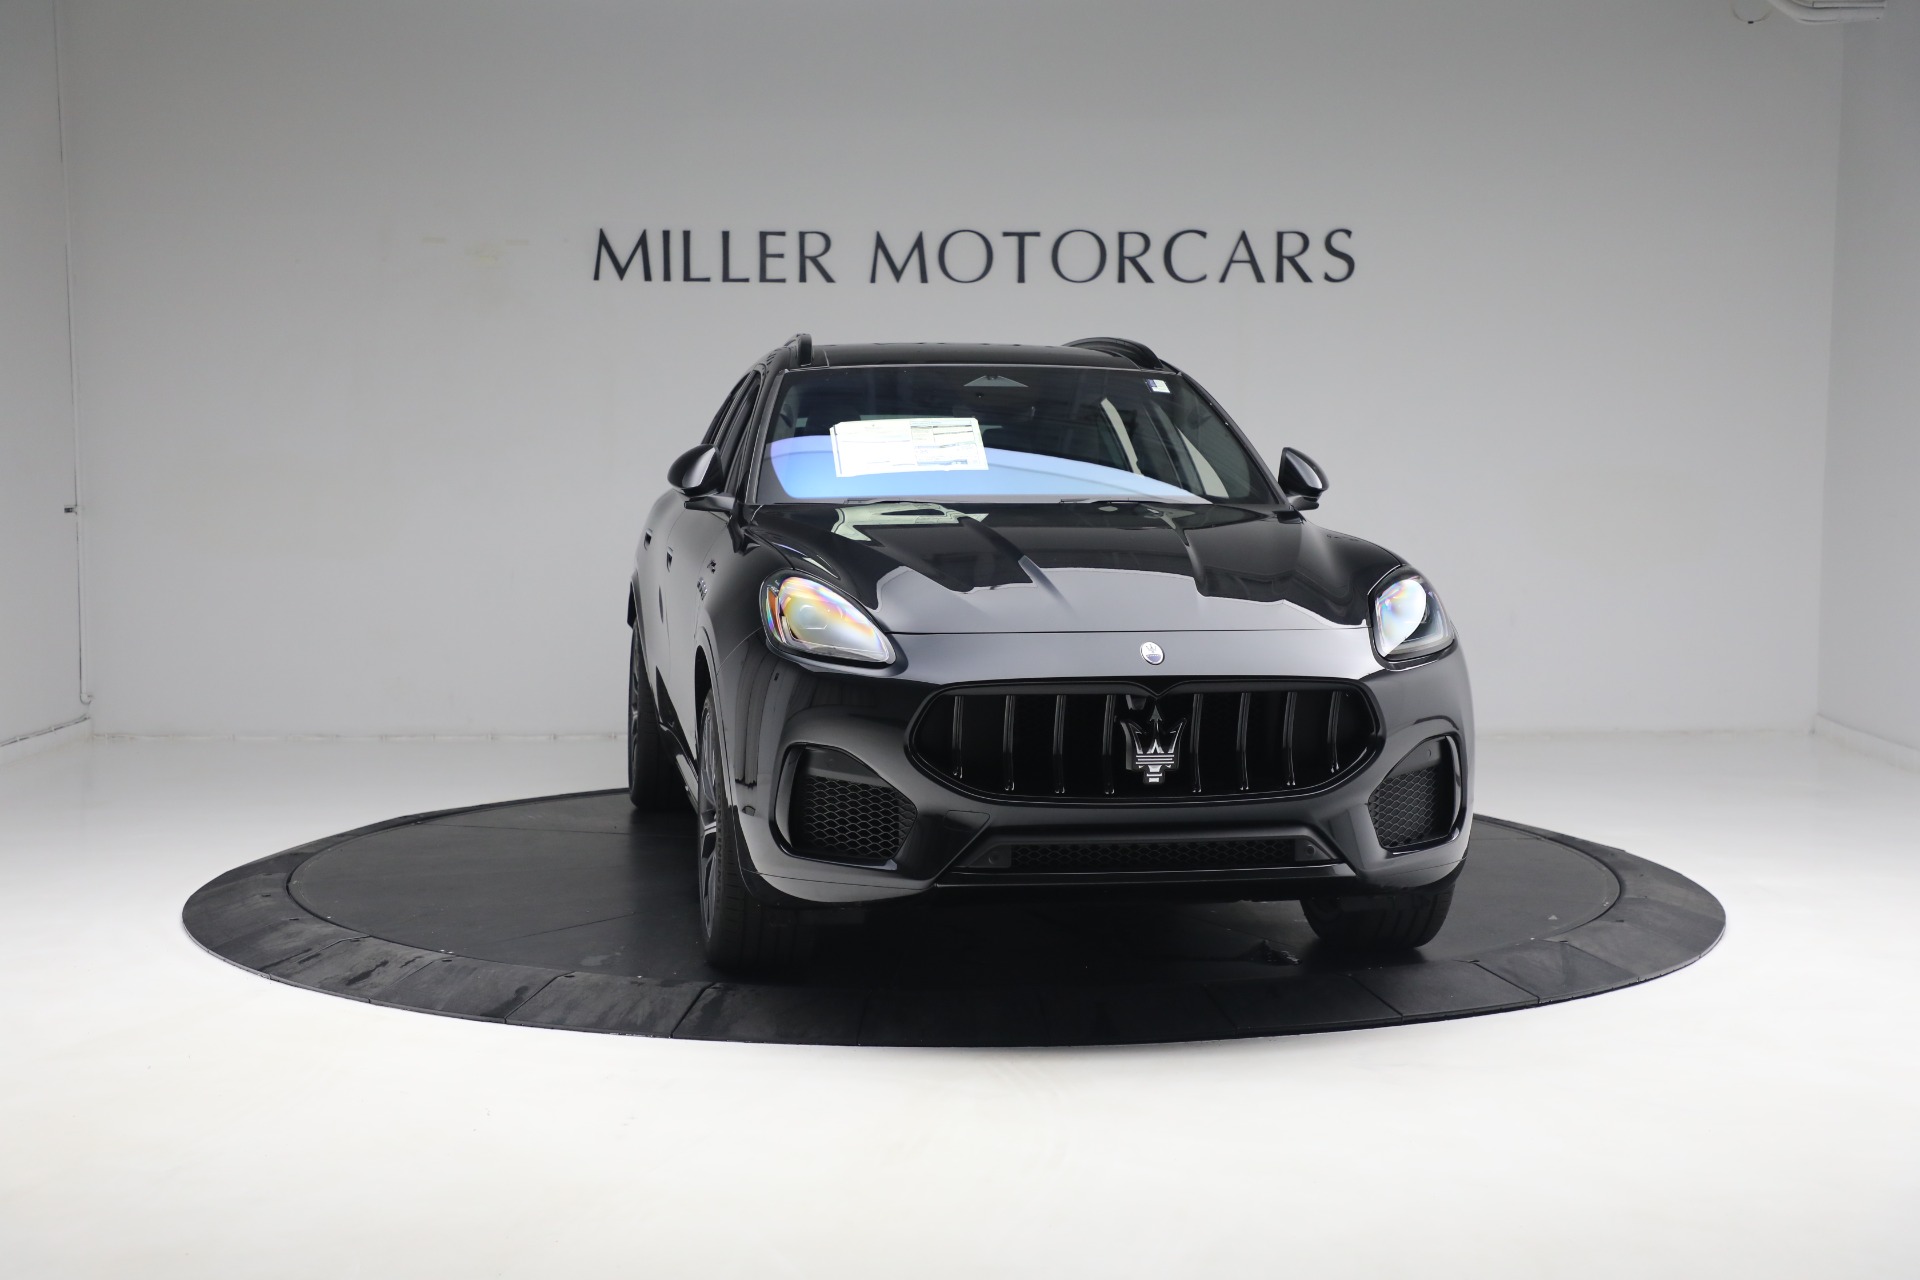 New 2023 Maserati Grecale Modena